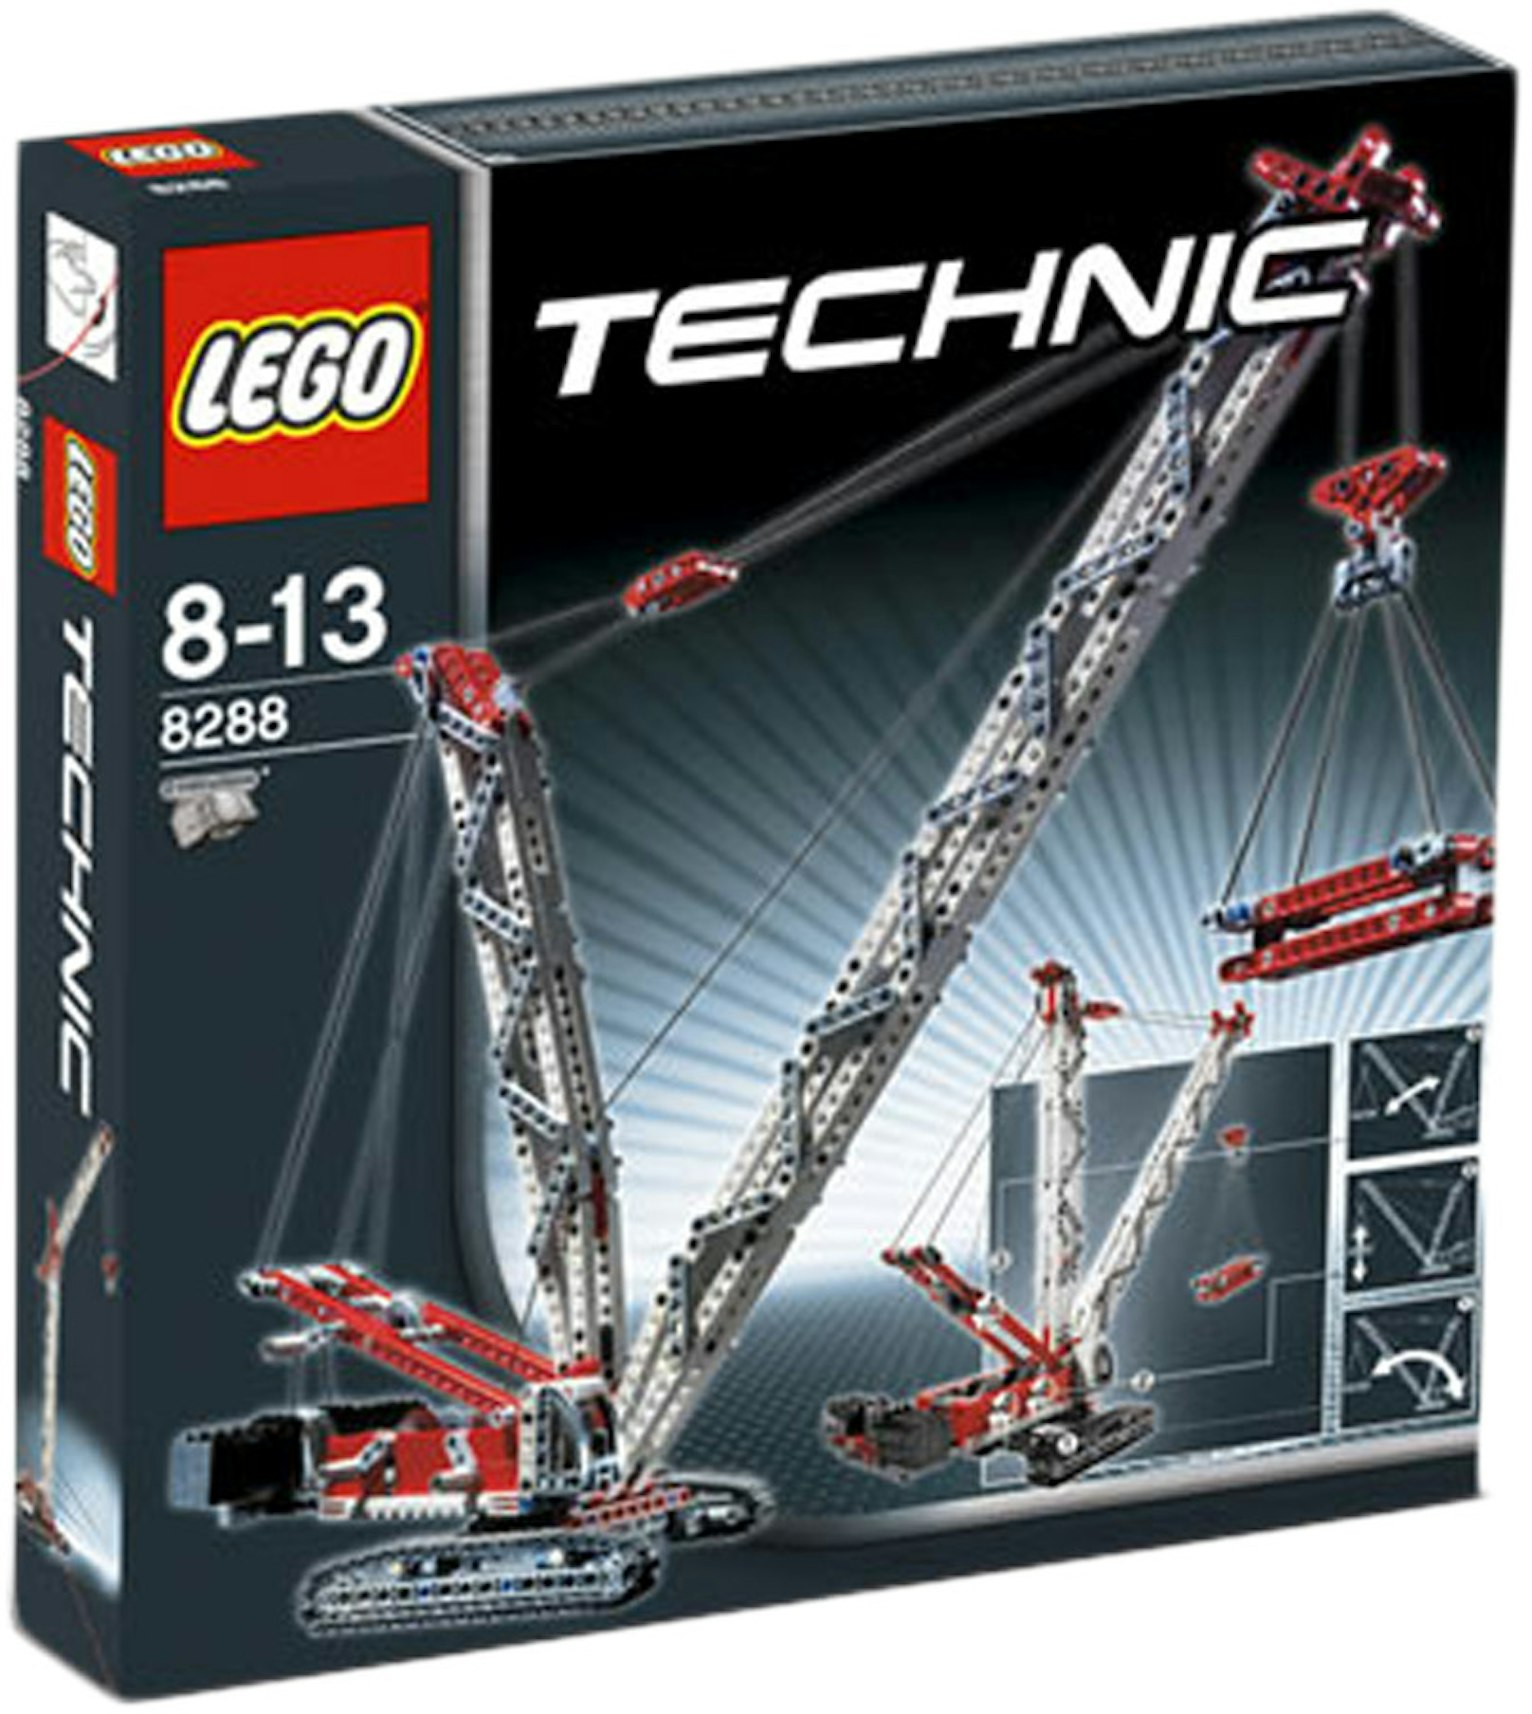 Technic Crawler Crane Set 8288 - US